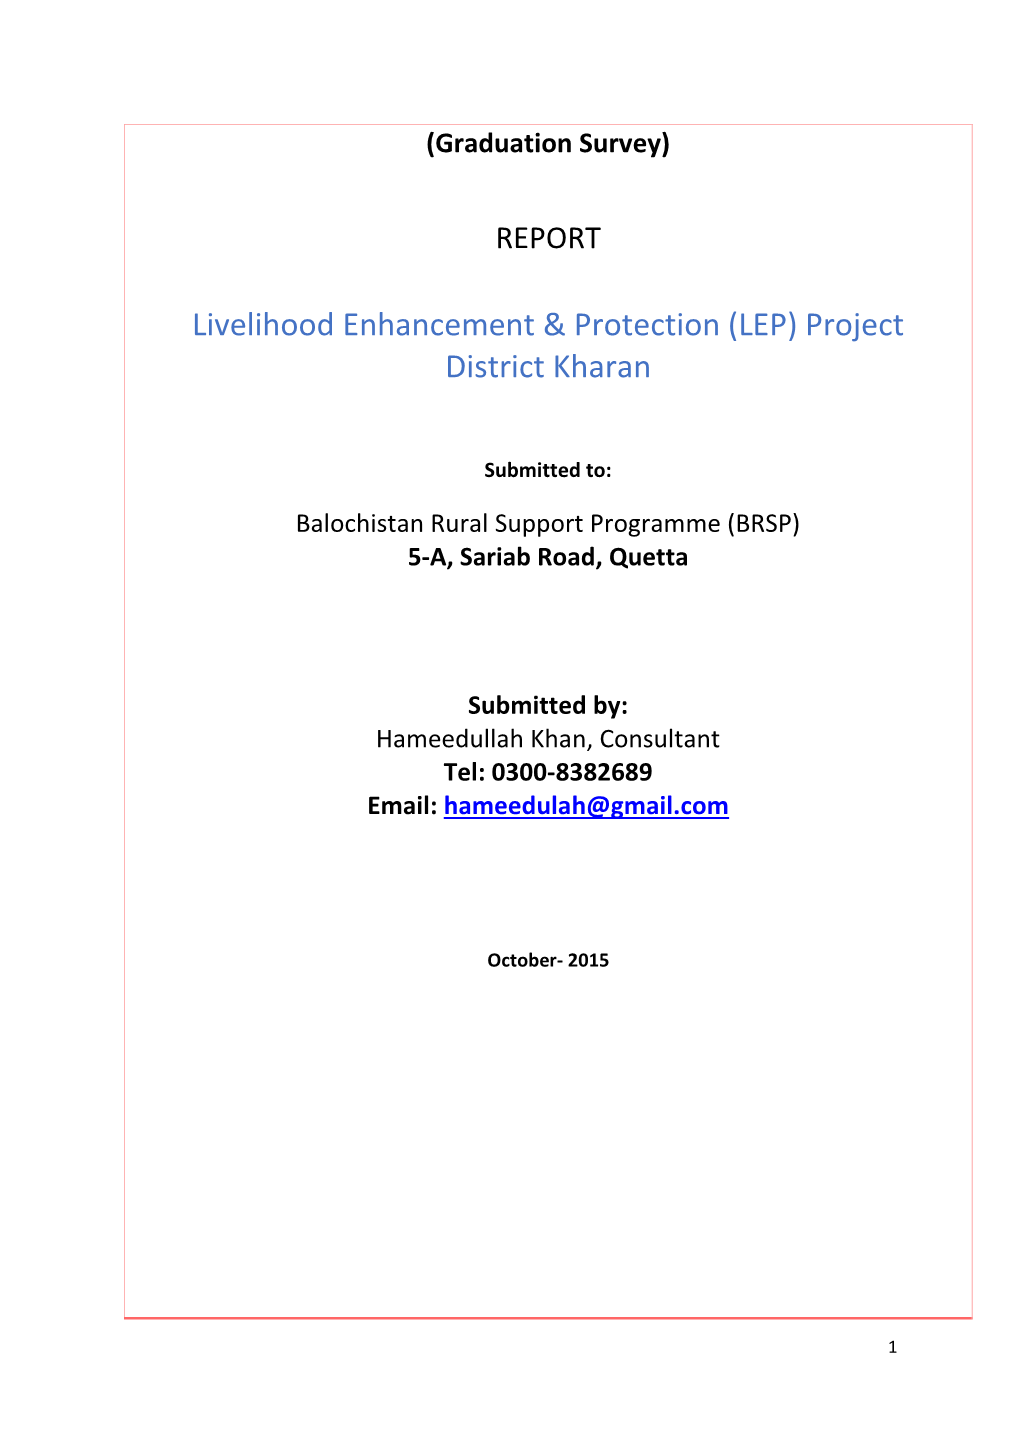 Livelihood Enhancement & Protection (LEP) Project District Kharan